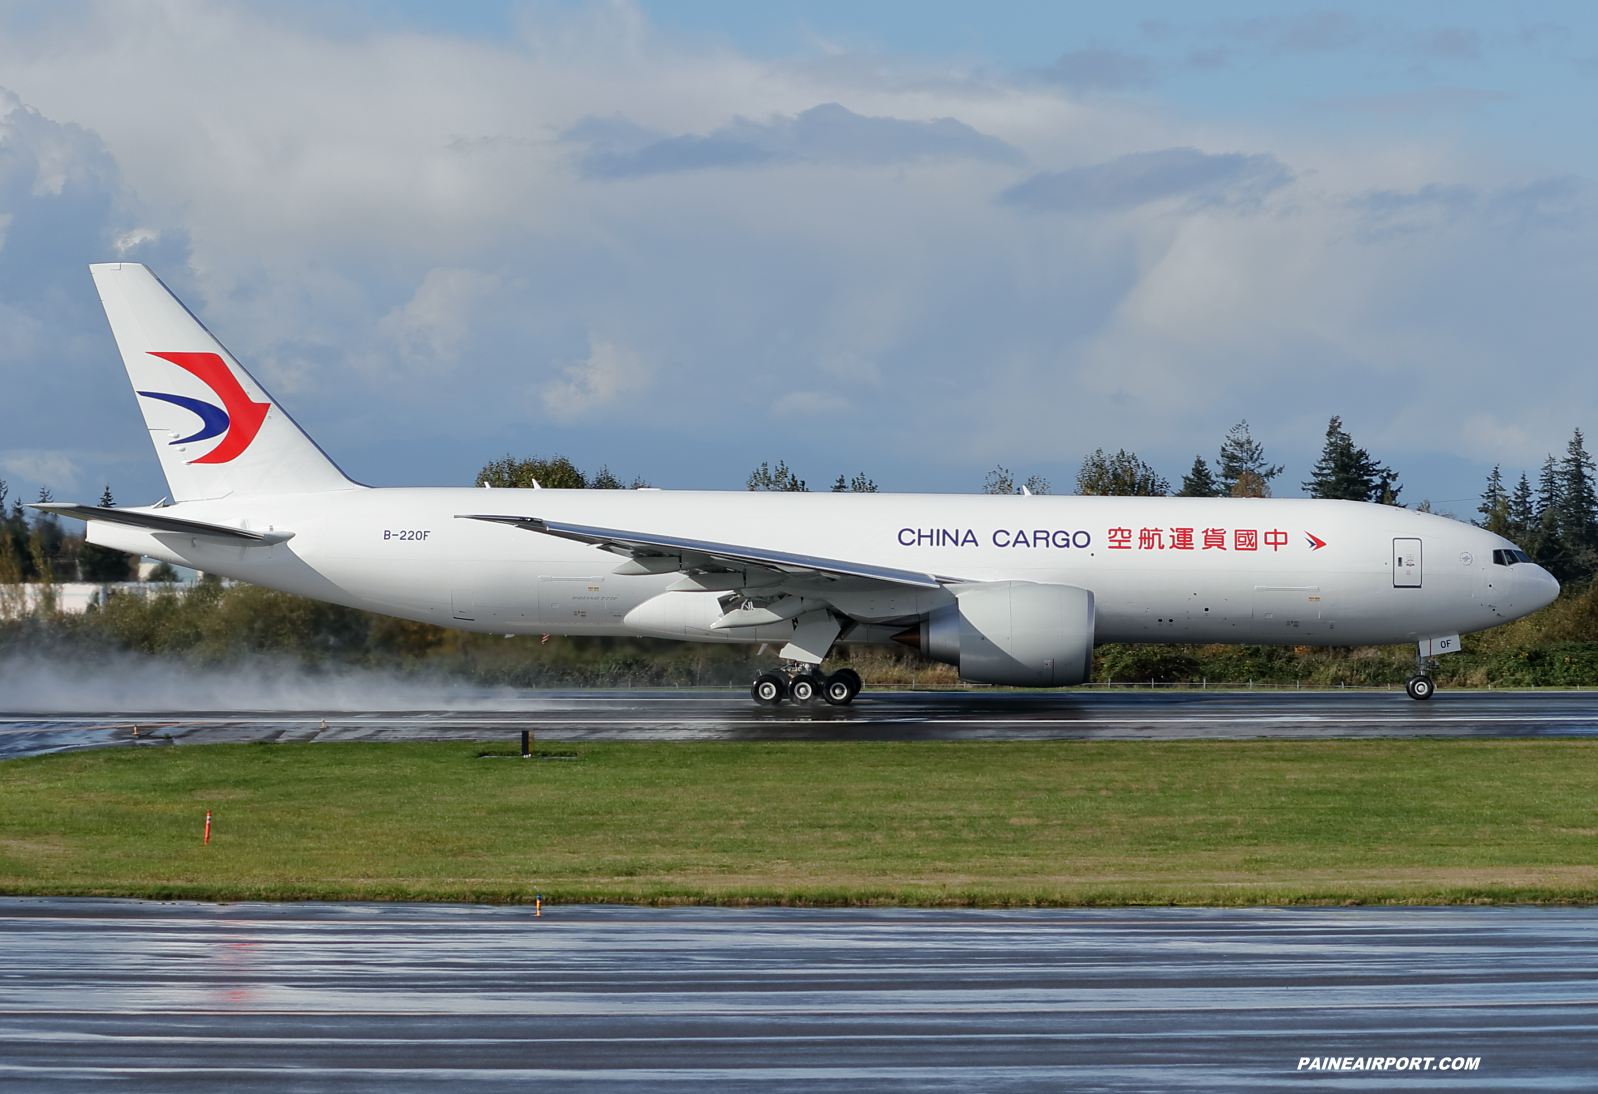 China Cargo 777F B-220F at KPAE Paine Field